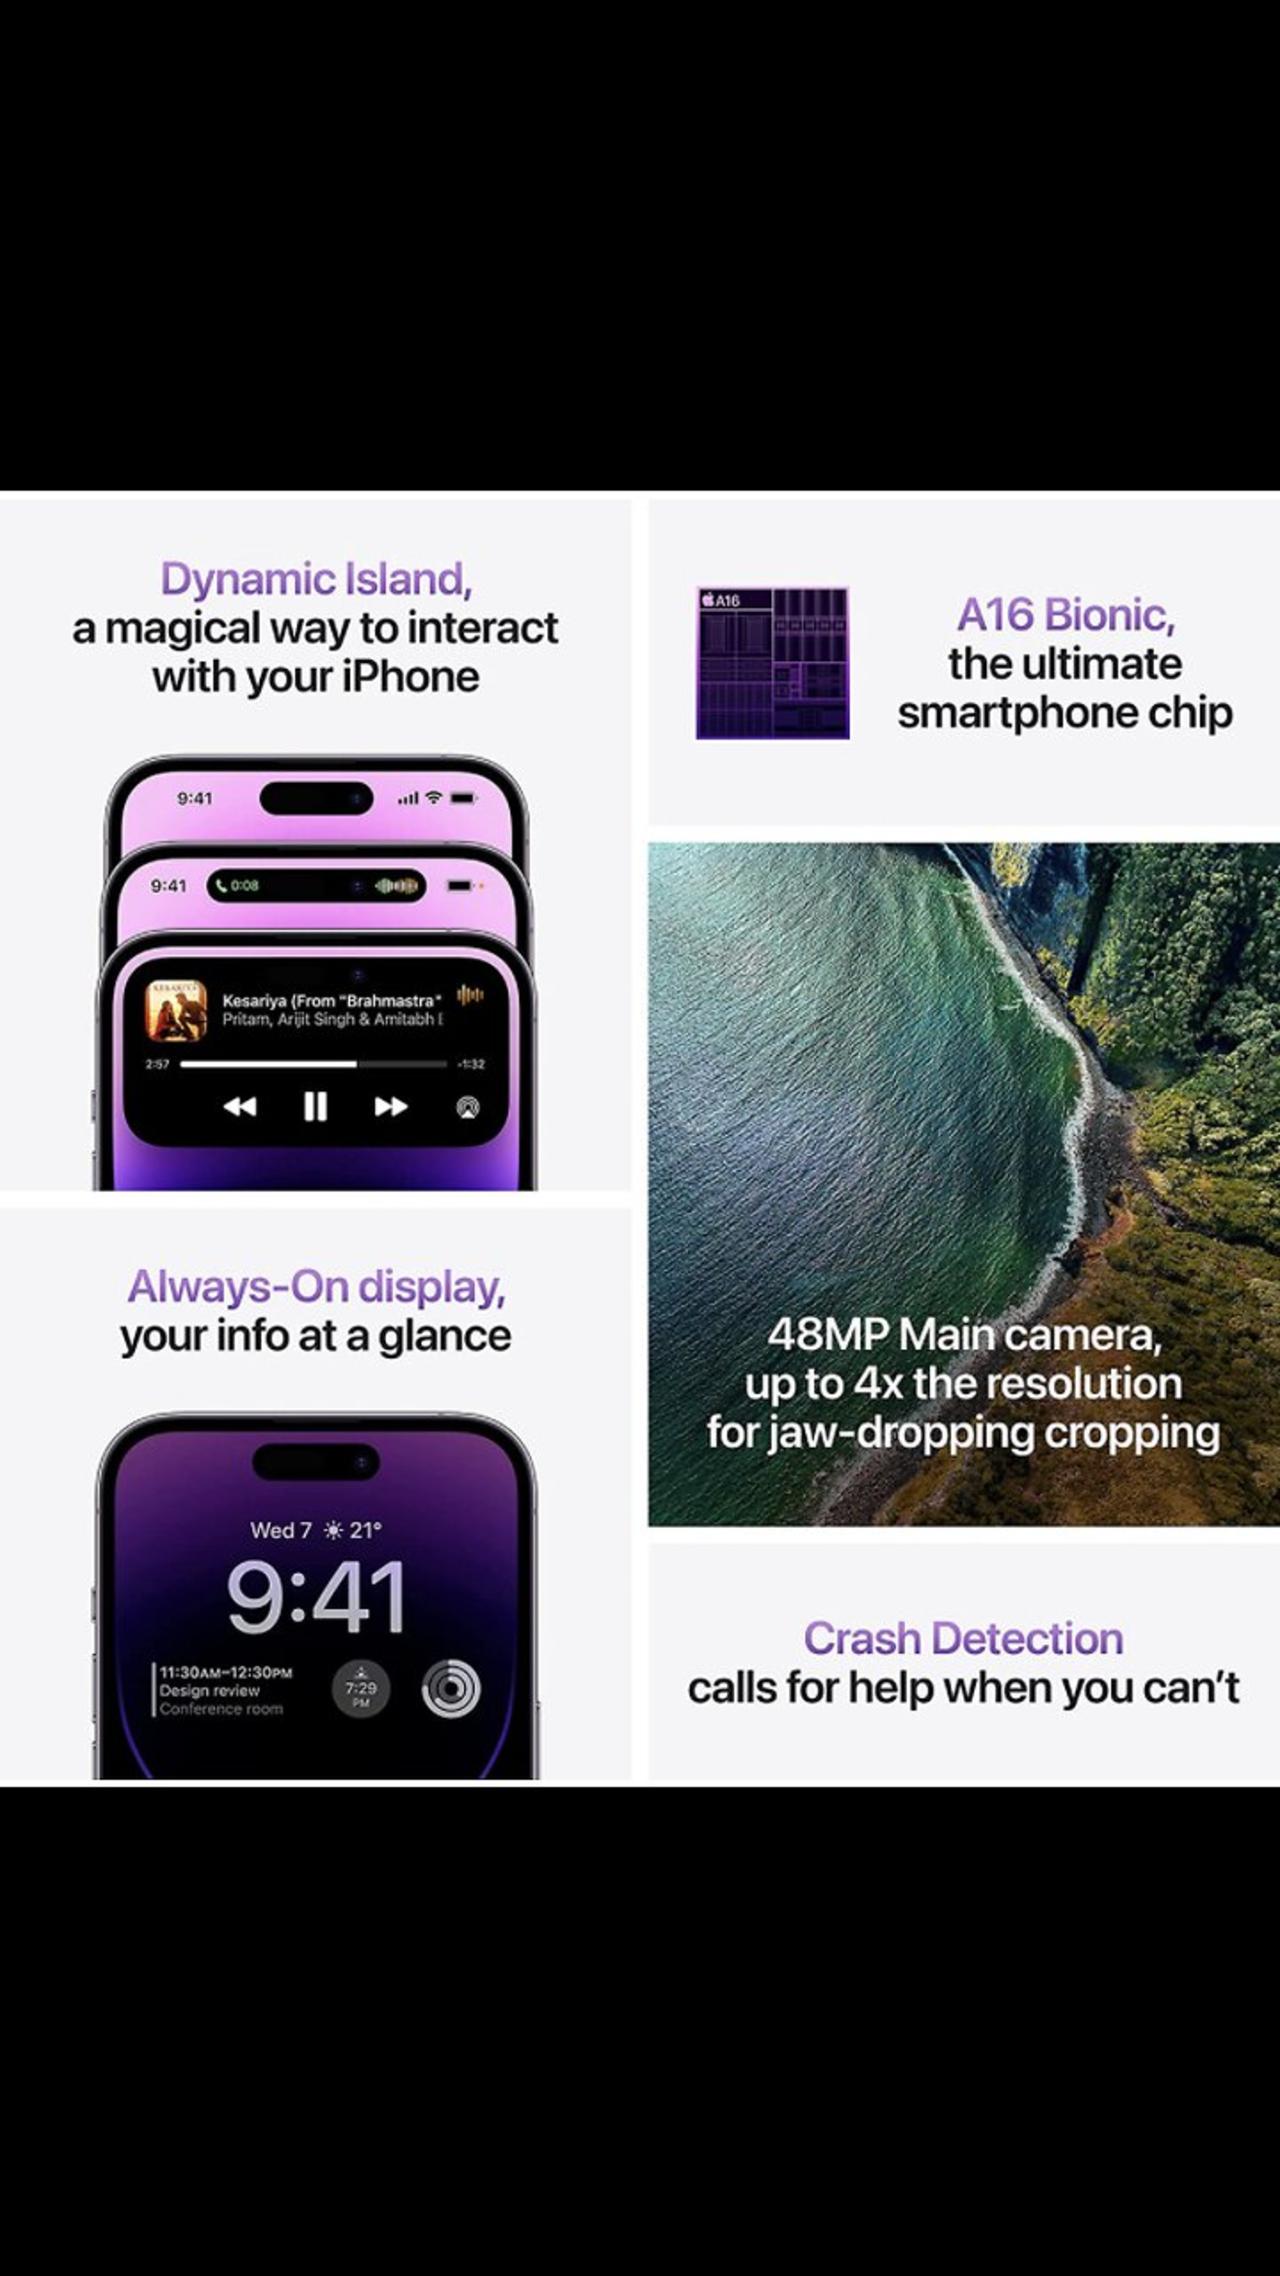 Apple iPhone 14 Pro Max (256 GB) - Deep Purple